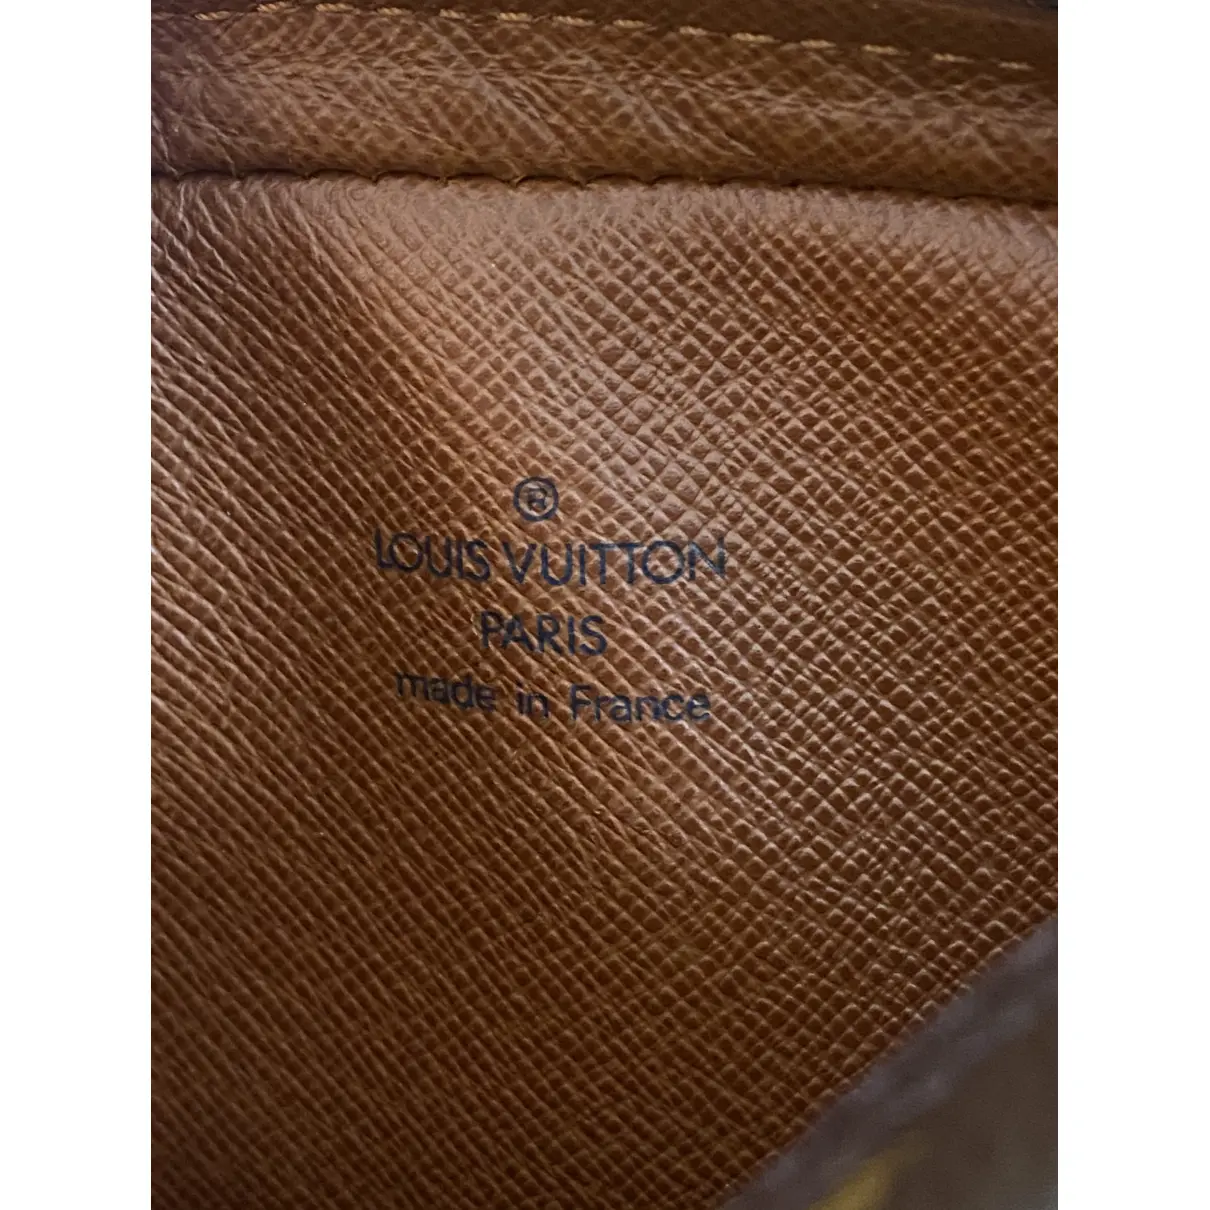 Danube cloth crossbody bag Louis Vuitton - Vintage